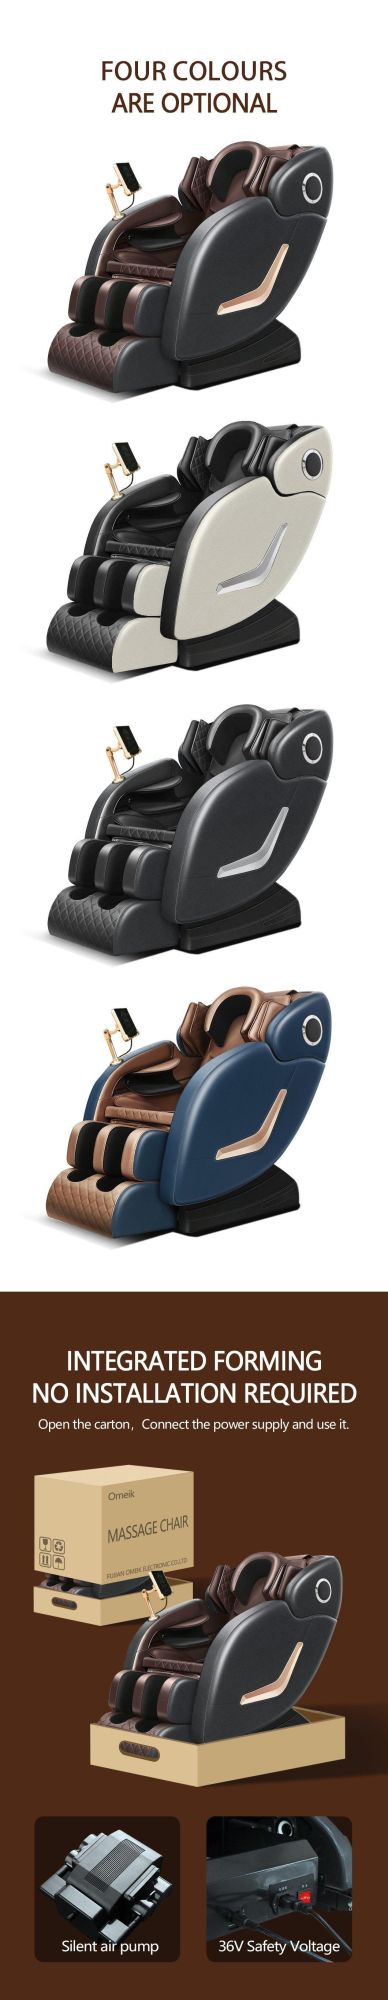 Best Price Luxury Home Use Smart Full Body Zero Gravity Sex Automatic Massage Chair